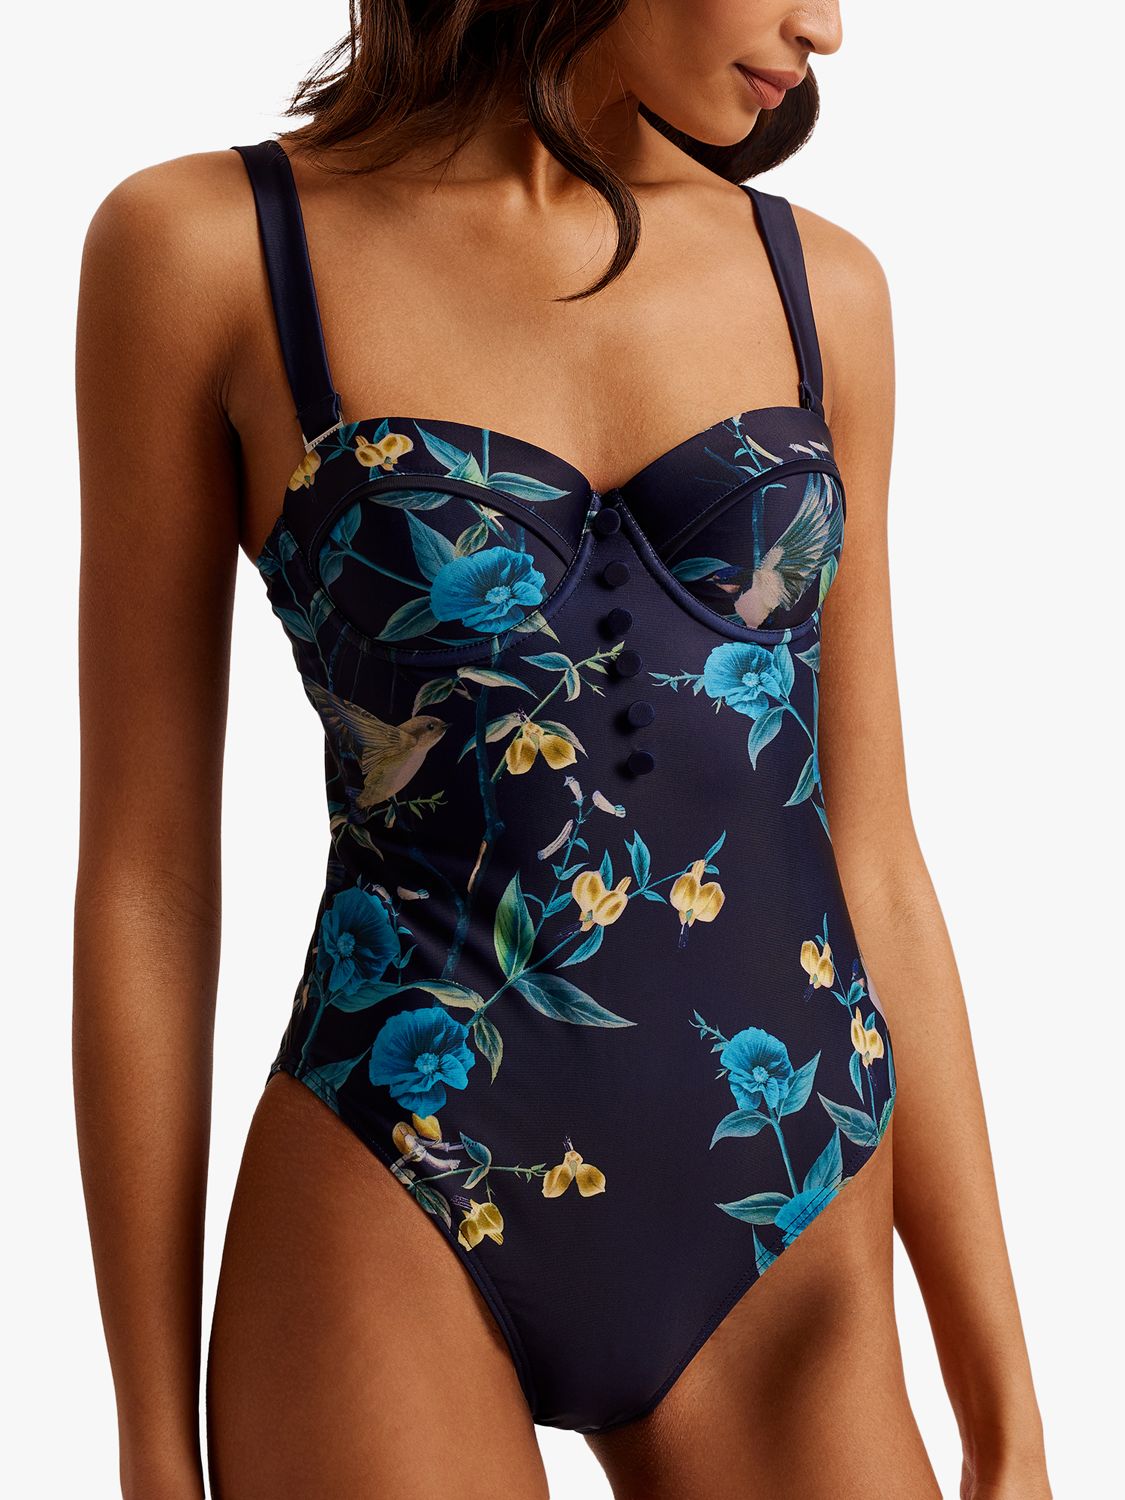 Ted Baker Rainnah Floral Print Button Detail Swimsuit, Navy/Multi, 10